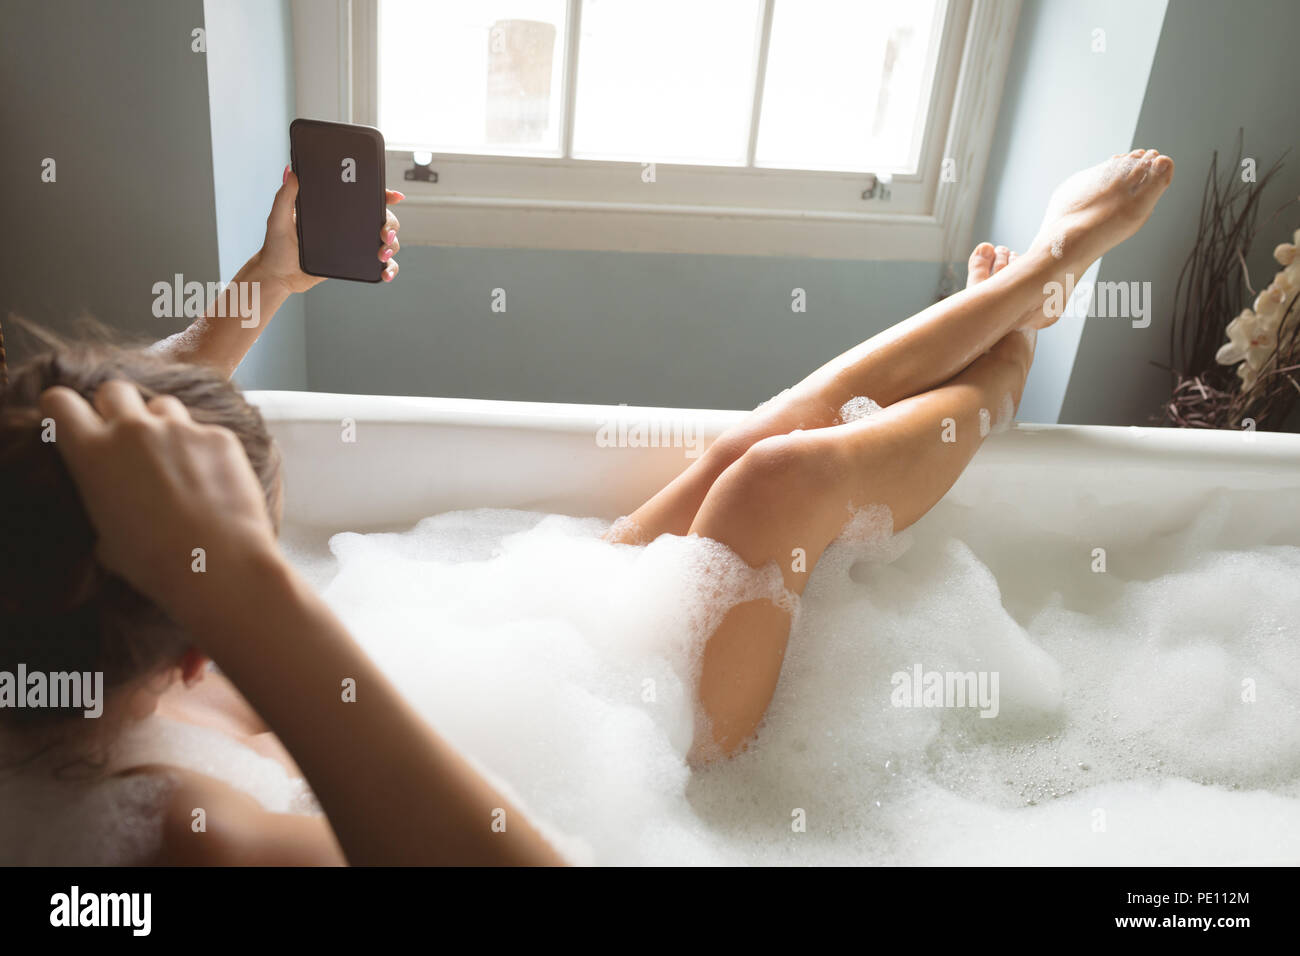 Woman using mobile phone while taking a bath in bath tub Stock Photo